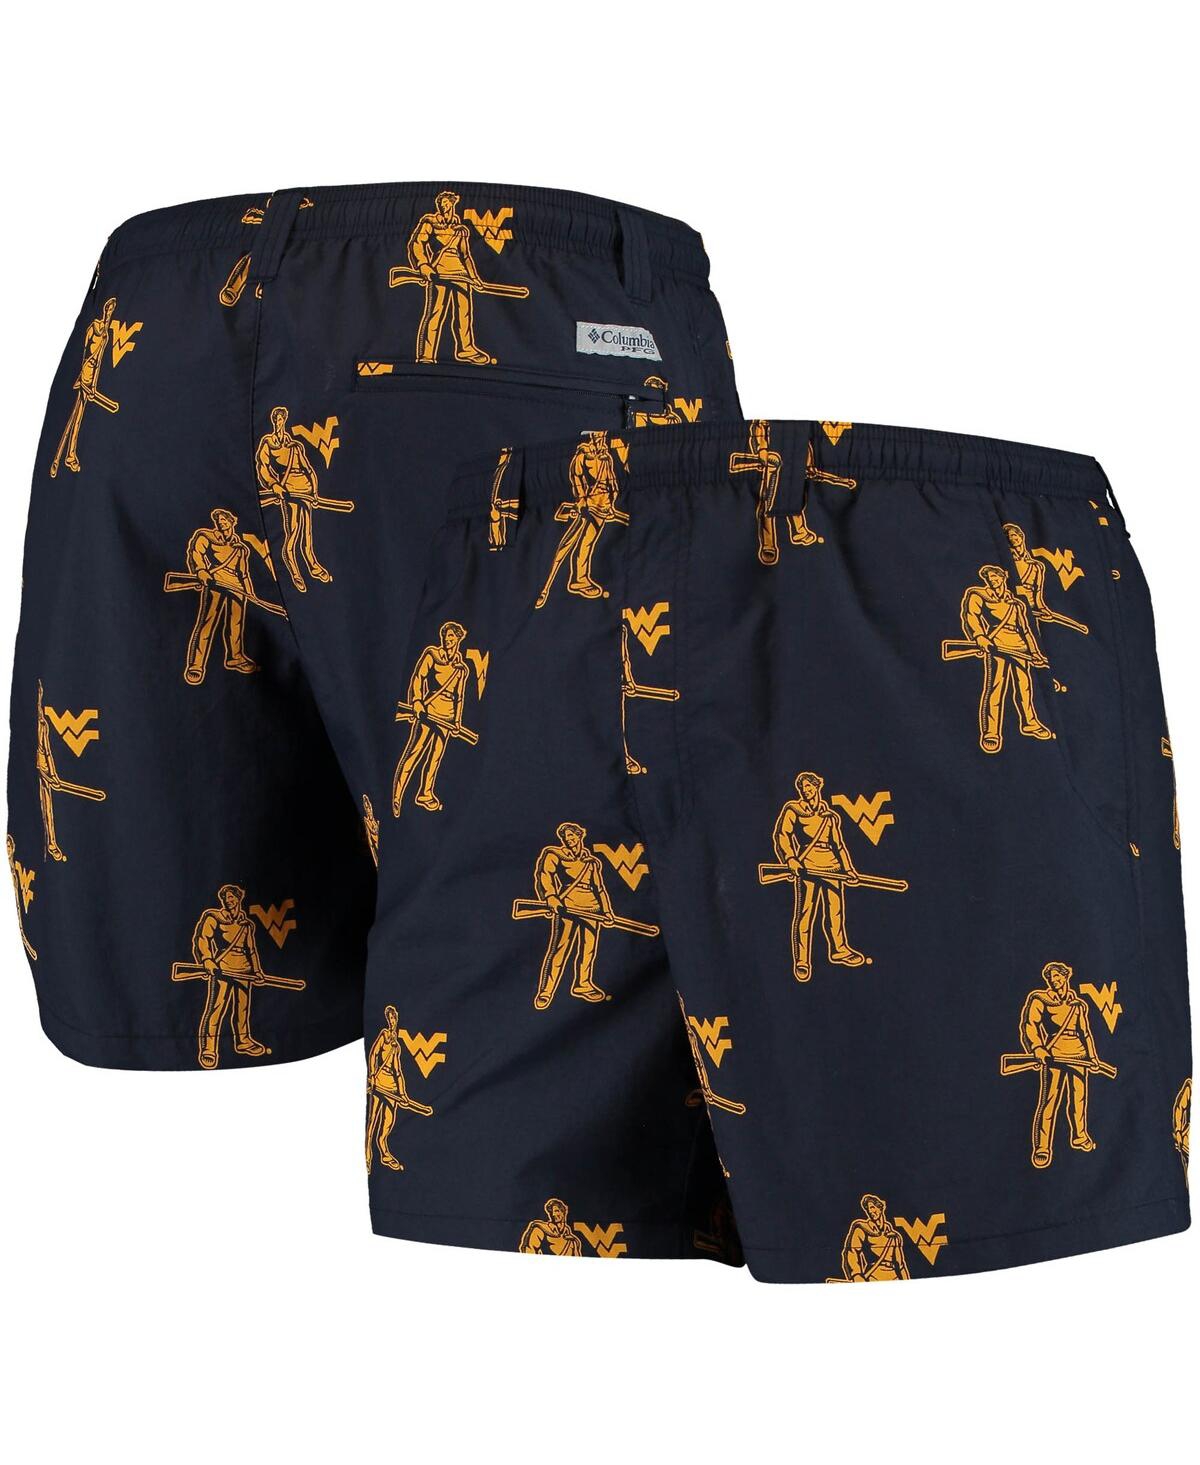 Shop Columbia Men's  Navy West Virginia Mountaineers Pfg Backcast Ii Omni-shade Hybrid Shorts